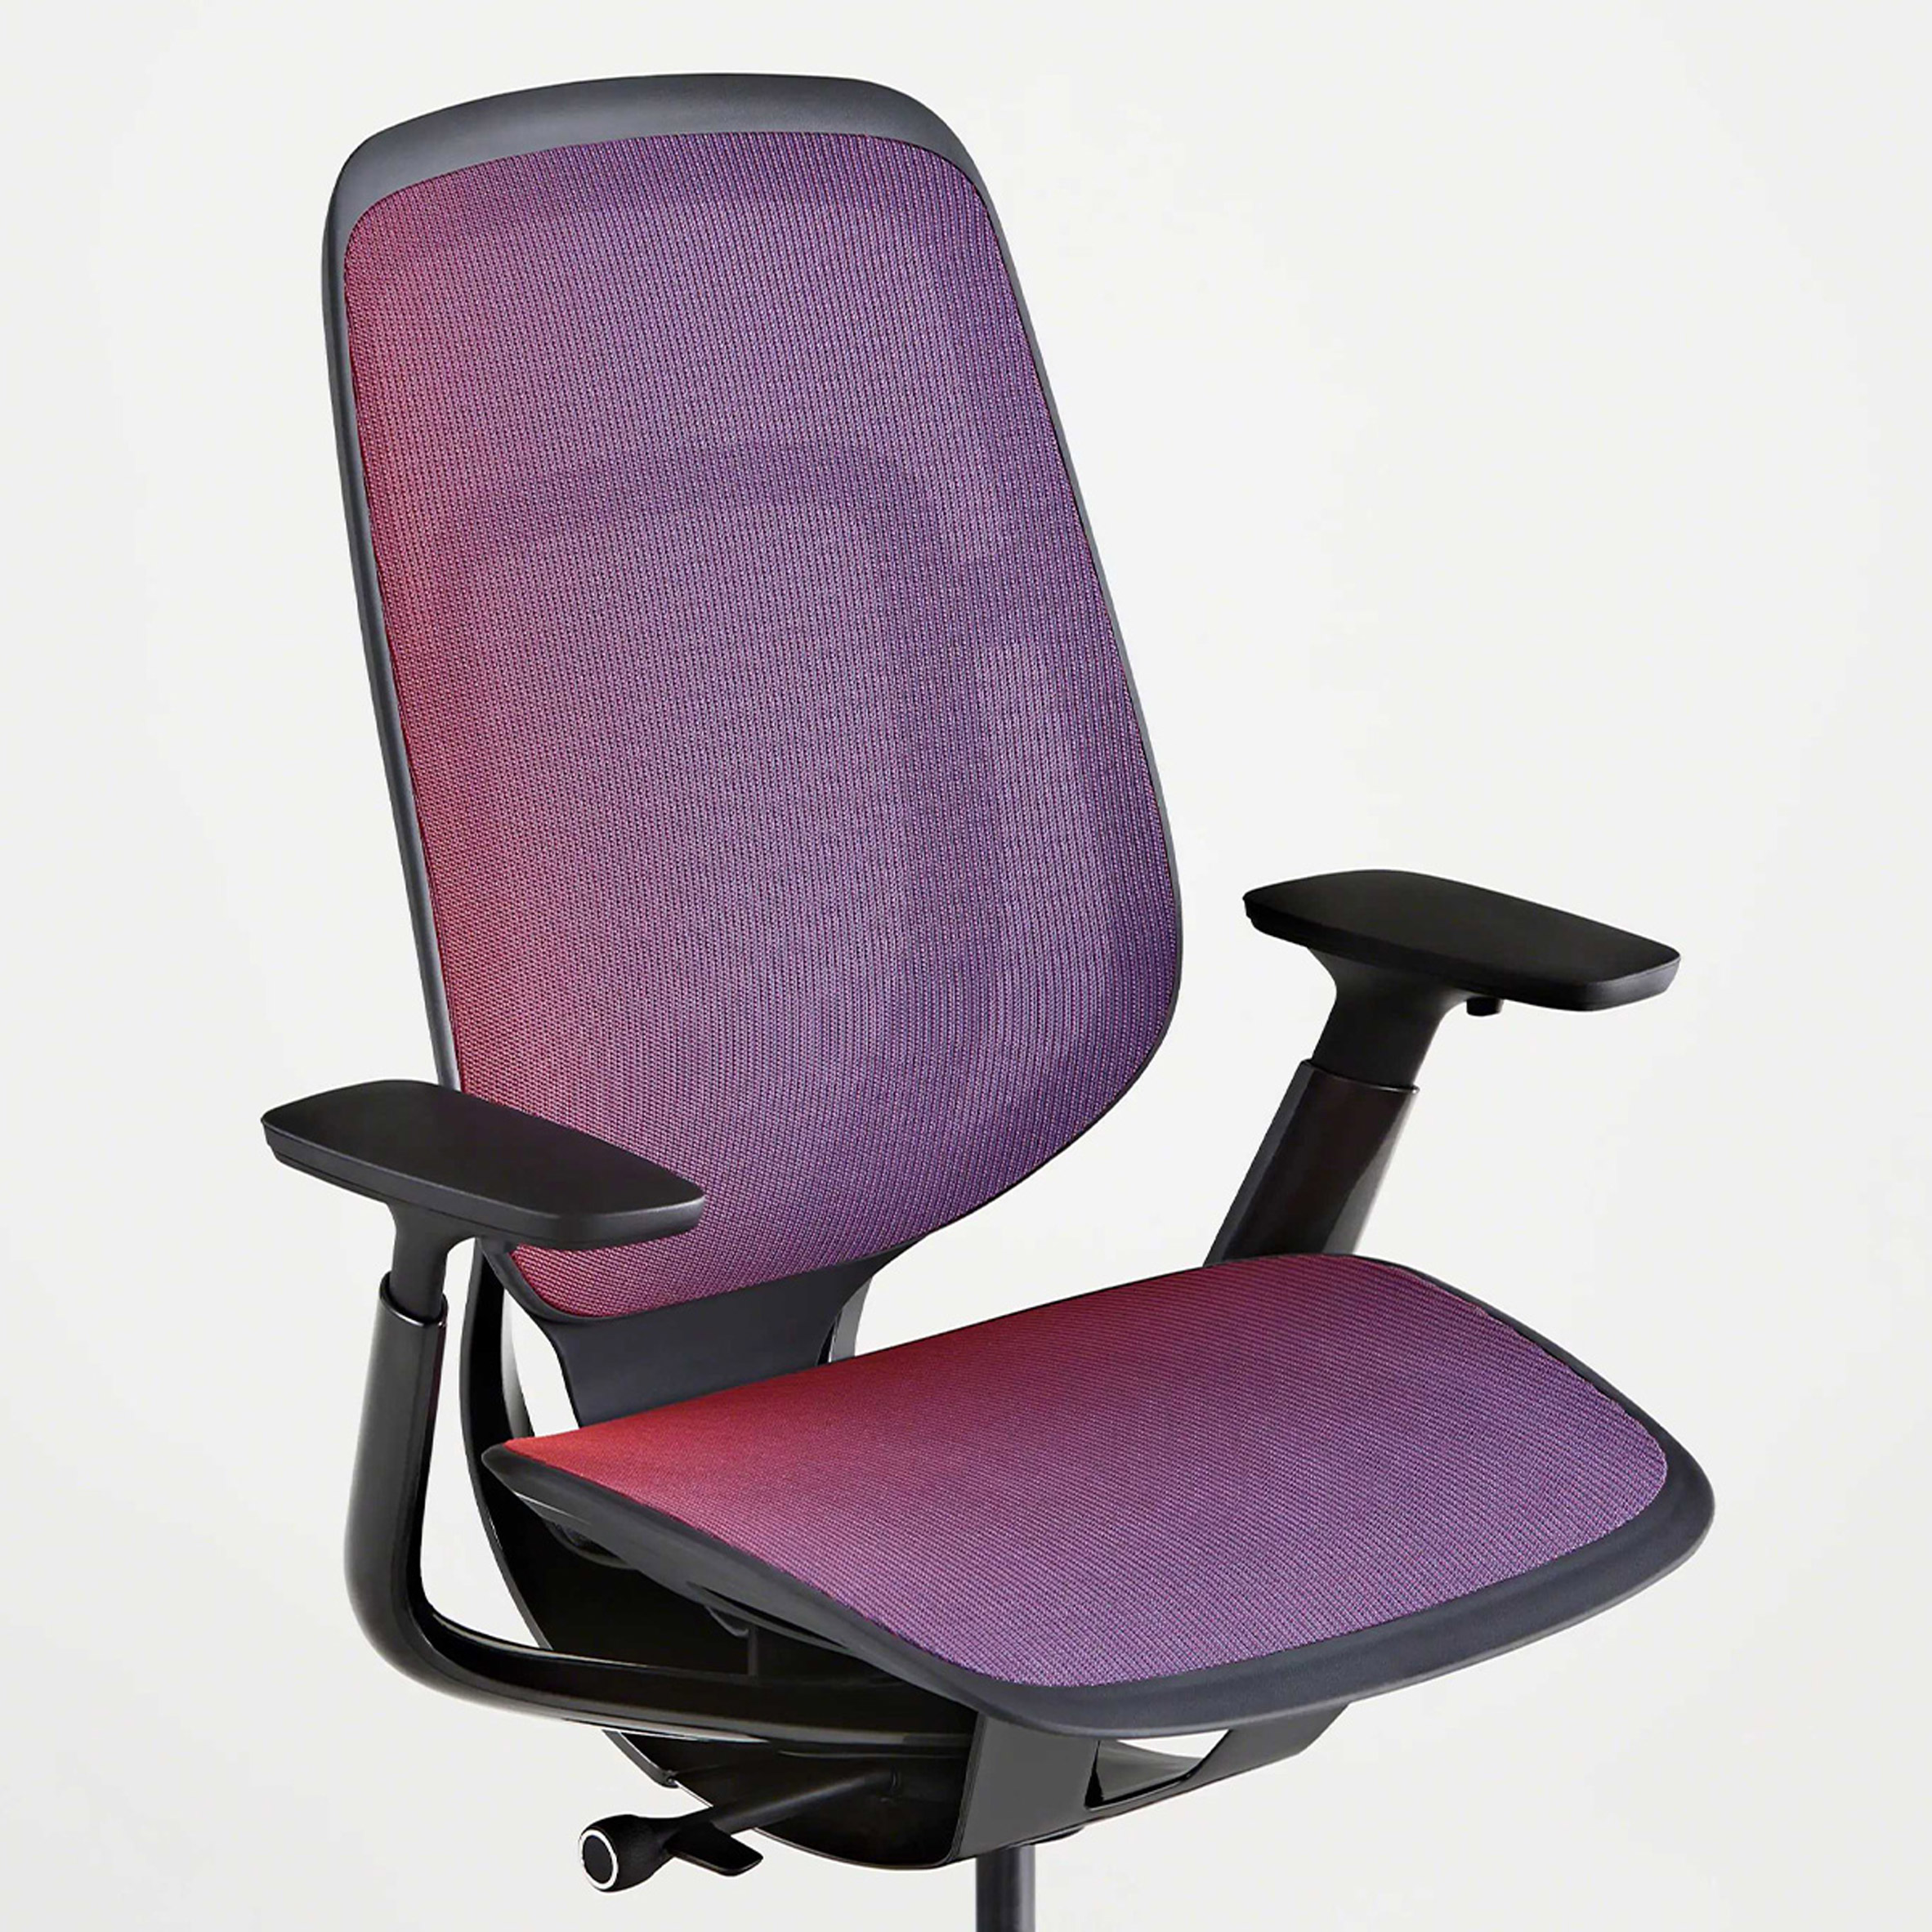 Black and purple Steelcase Karman chair